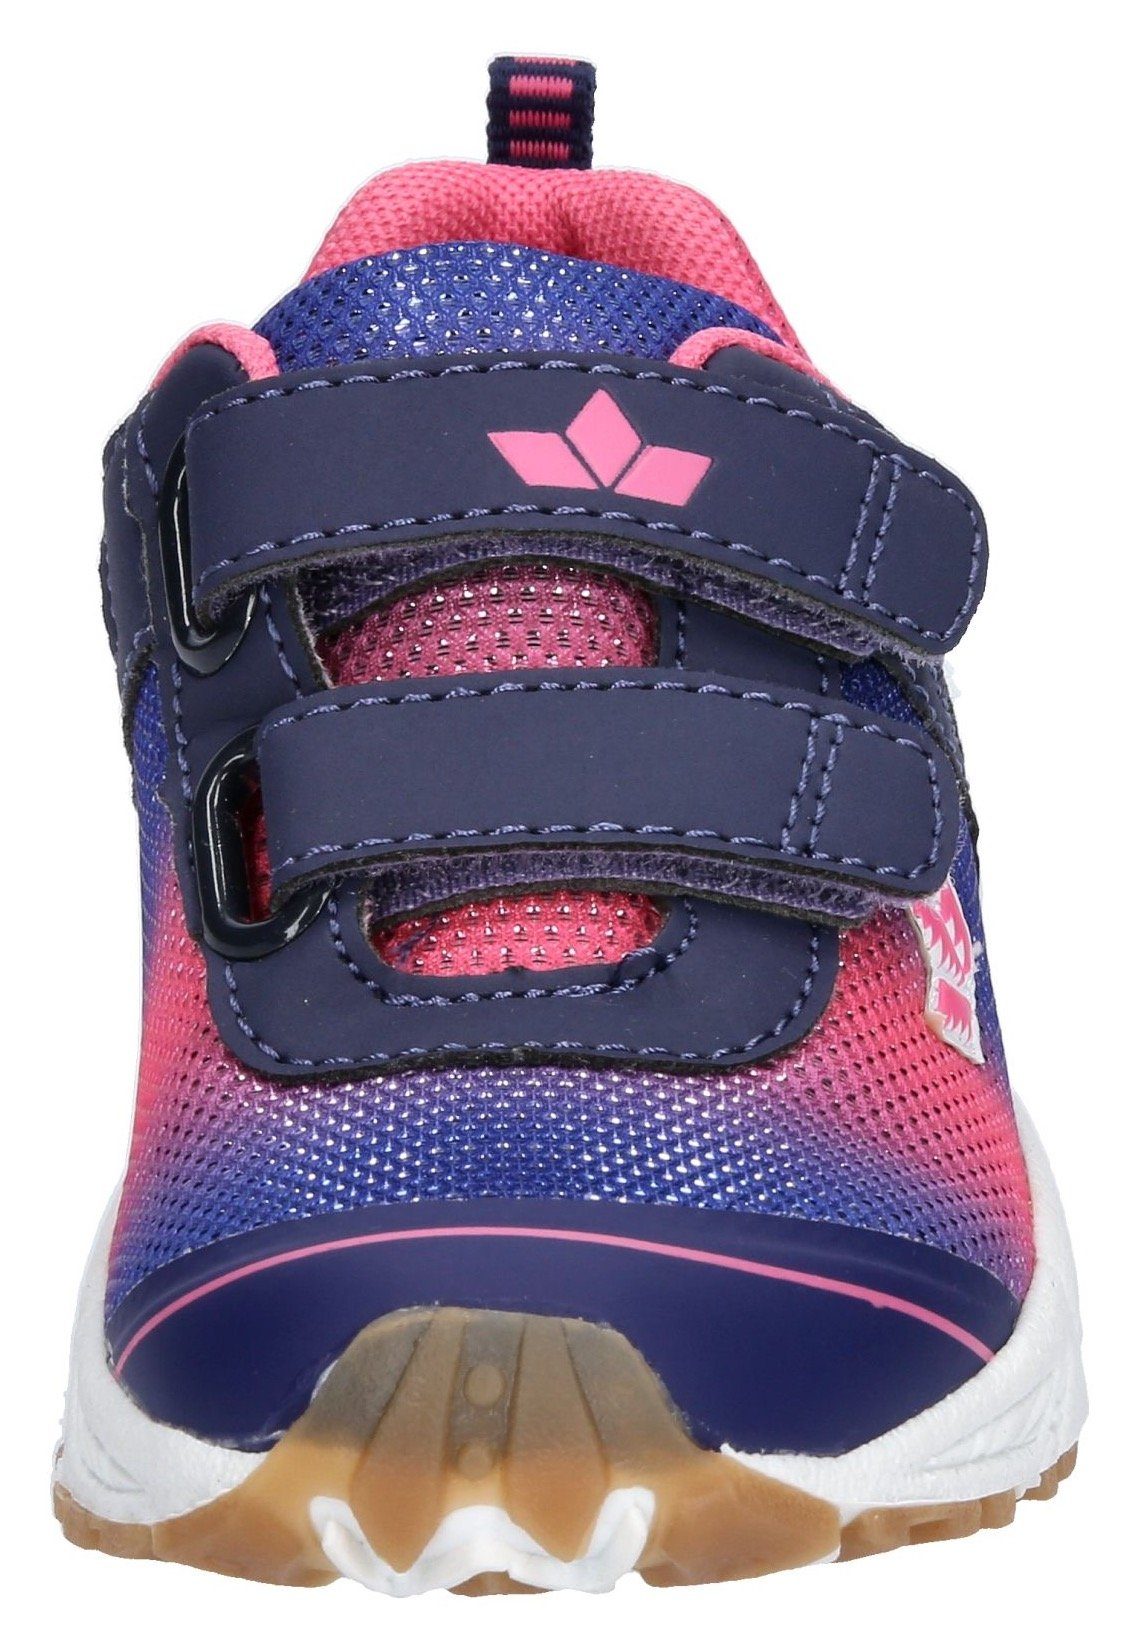 WMS coolem Sneaker Lico V mit Barney Farbverlauf lila-pink